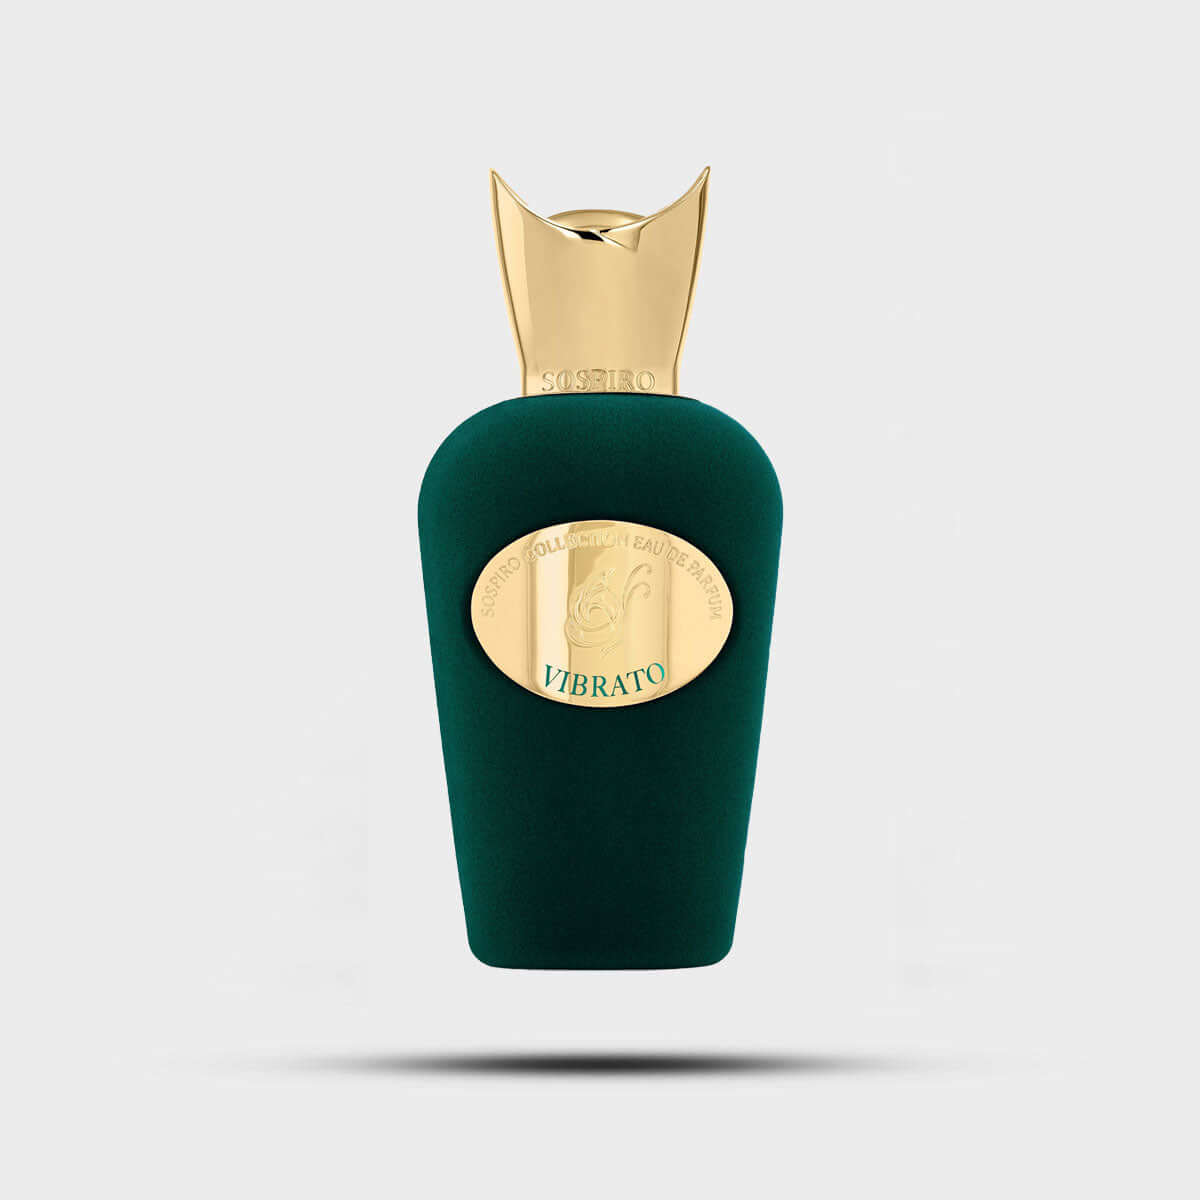 Vibrato Perfume by Sospiro 100ml